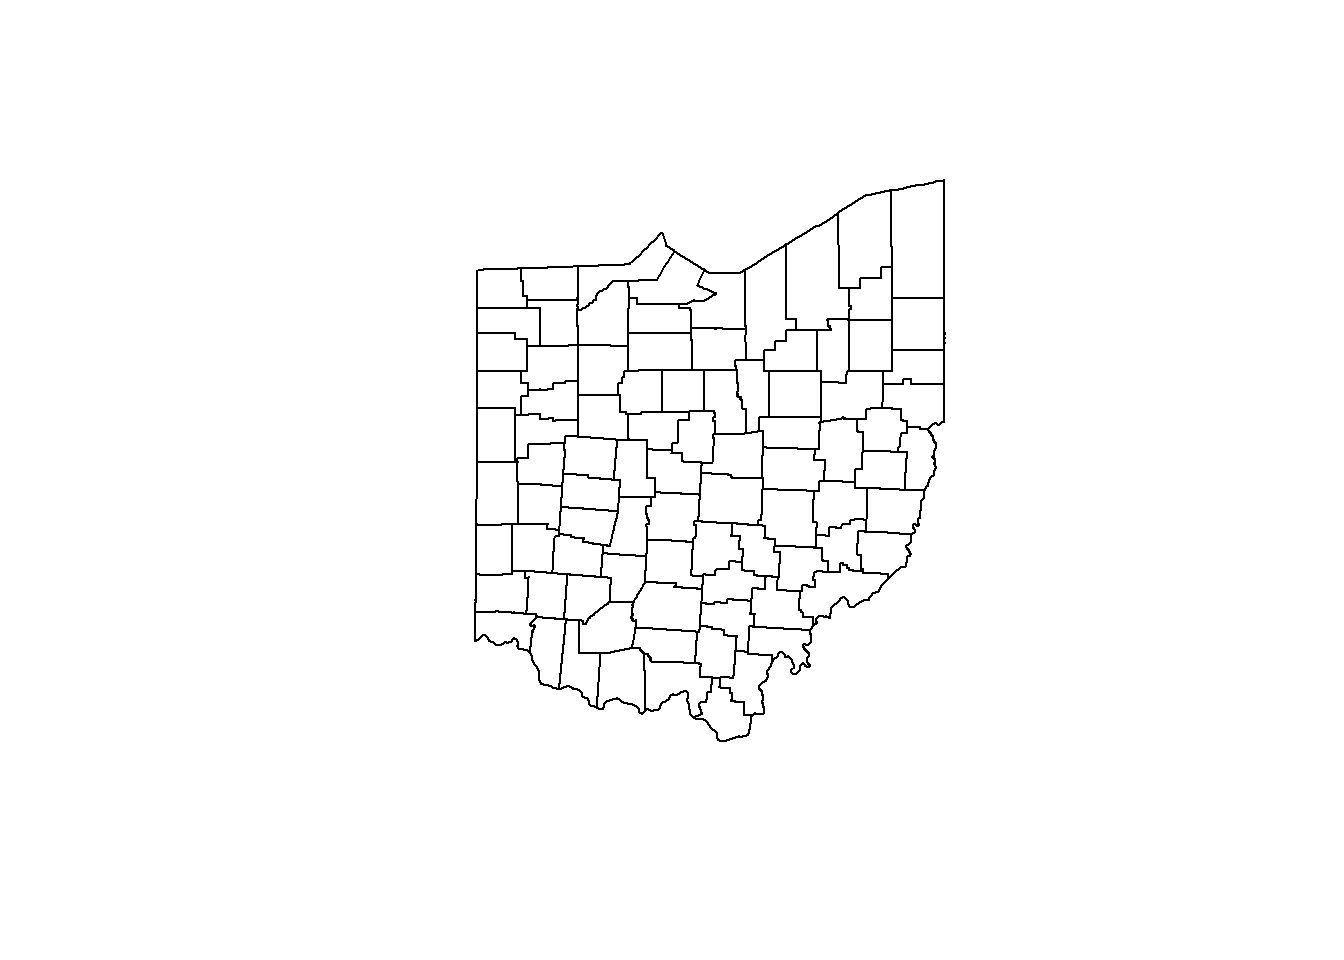 Map of Ohio counties.